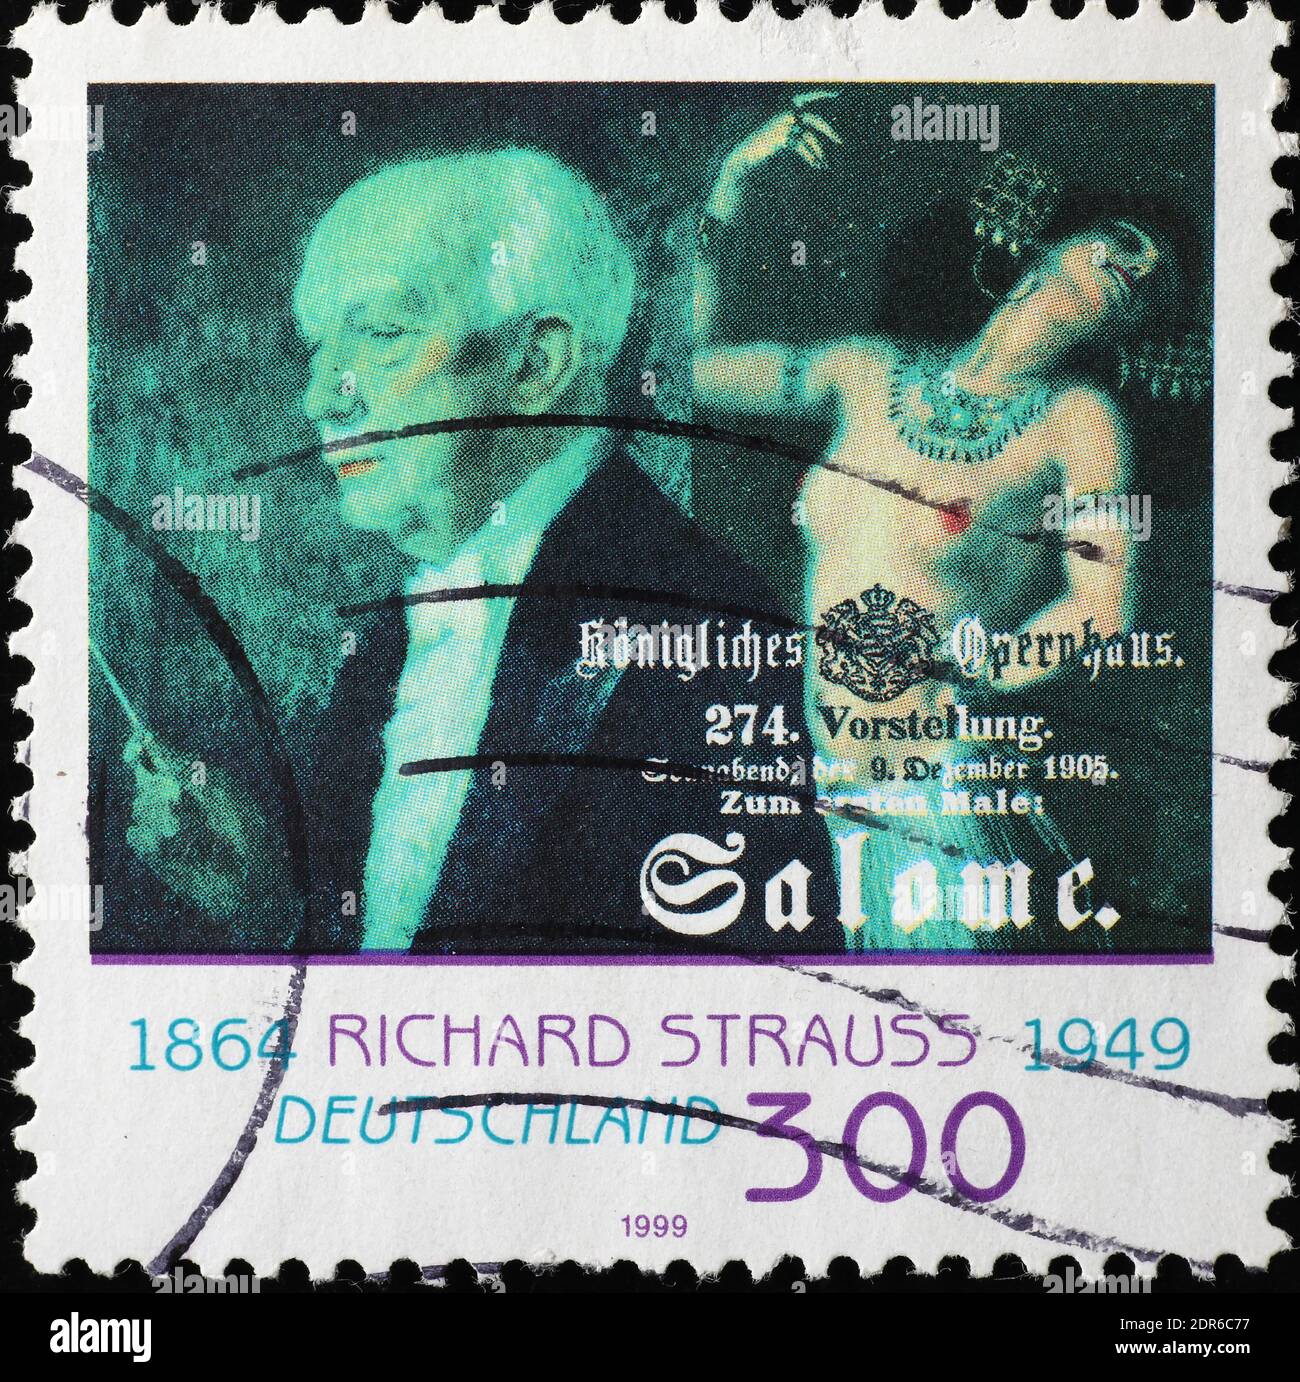 Salome, opera by Richard Strauss on postage stamp Stock Photo